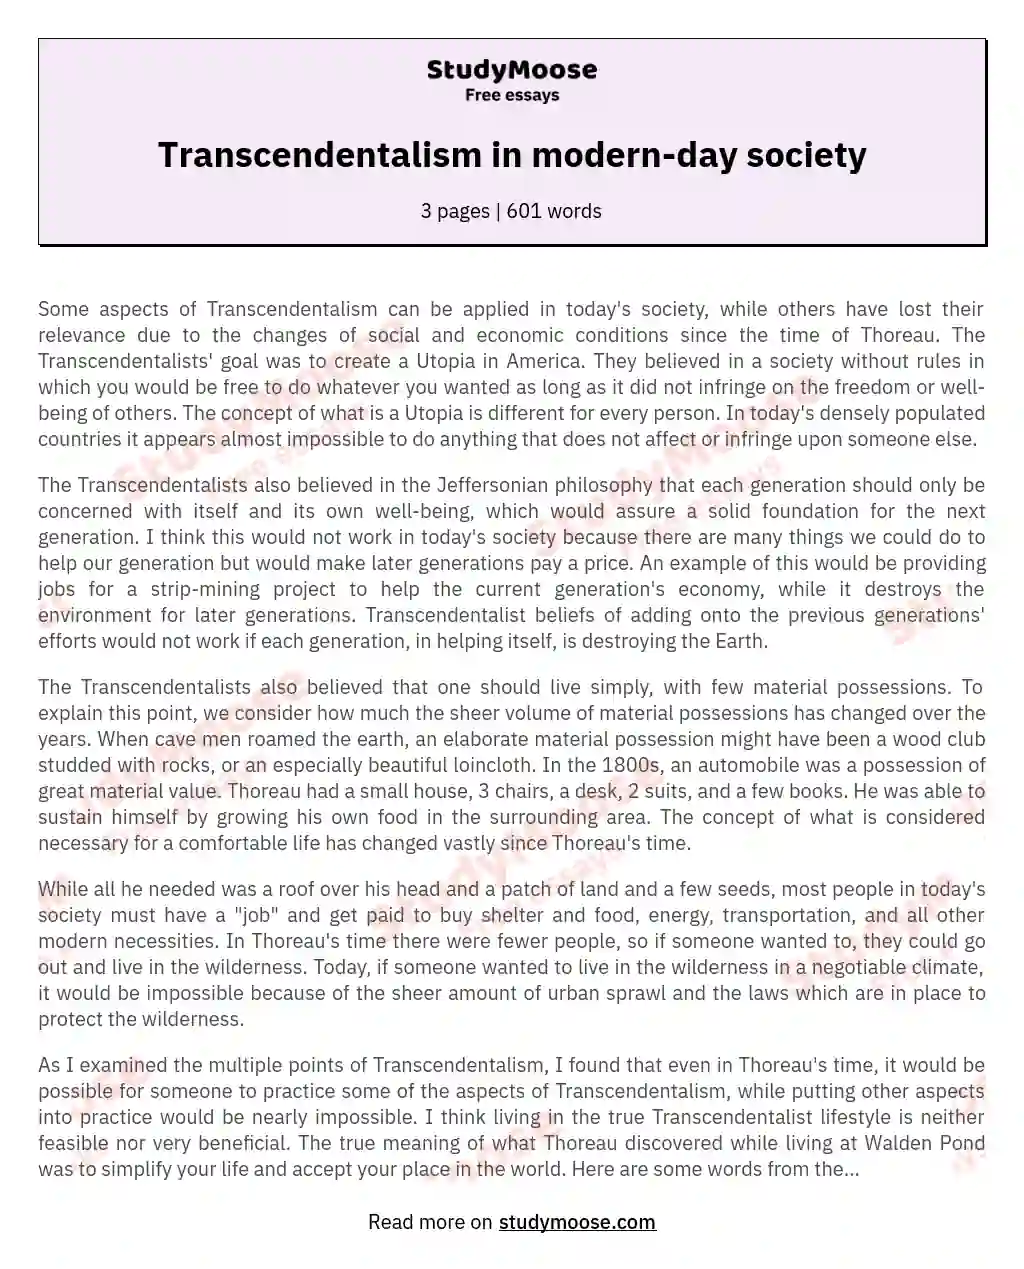 Transcendentalism in modern-day society